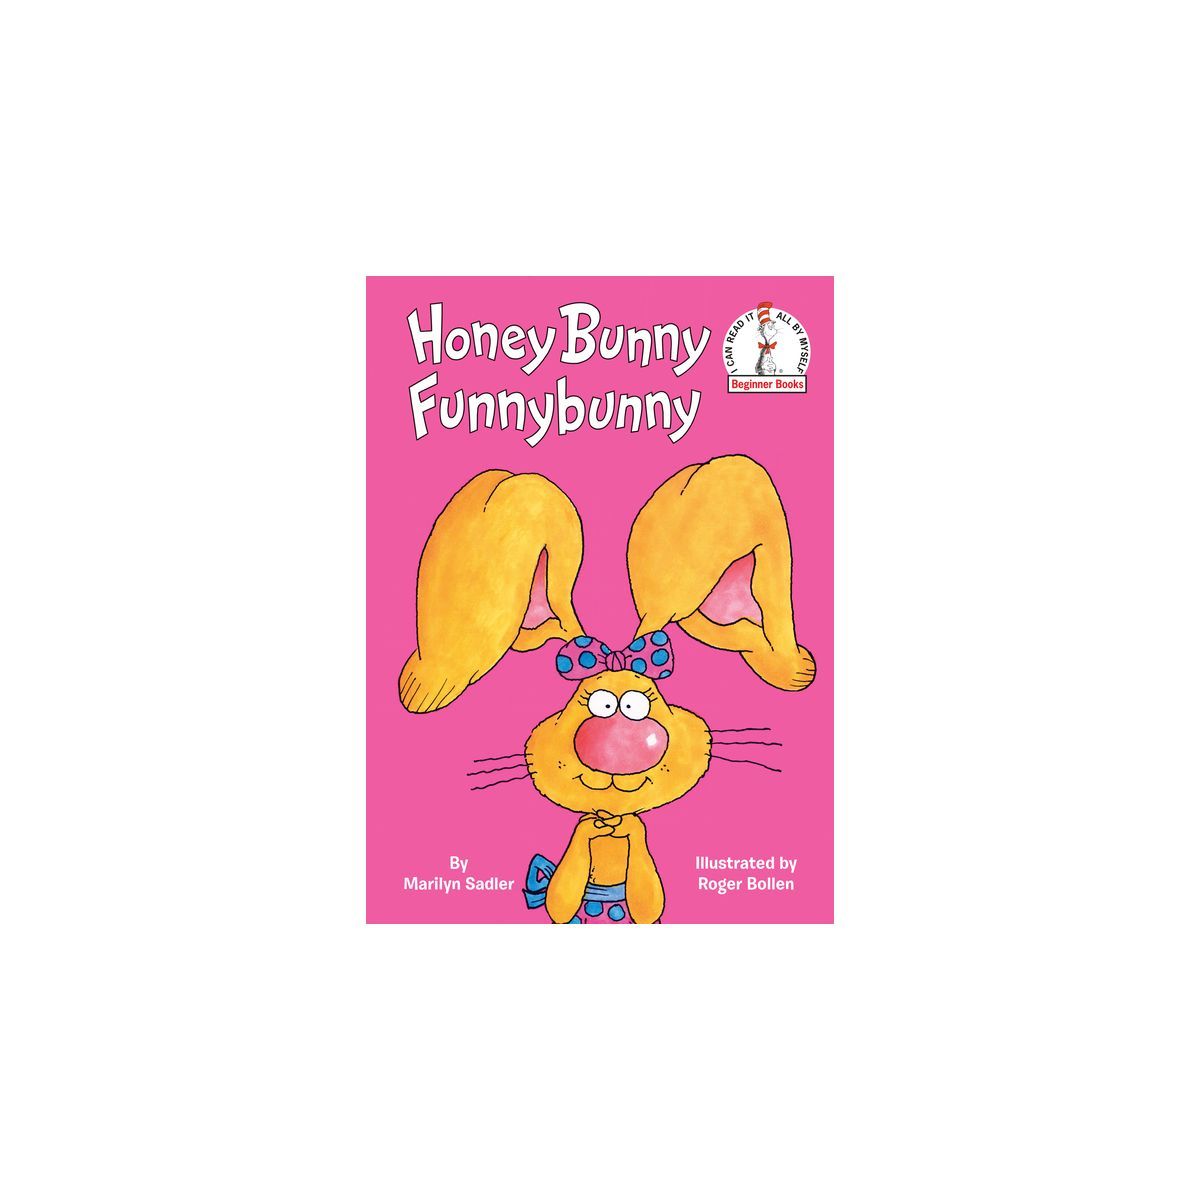 Honey Bunny Funnybunny - (Beginner Books(r)) by Marilyn Sadler (Hardcover) | Target